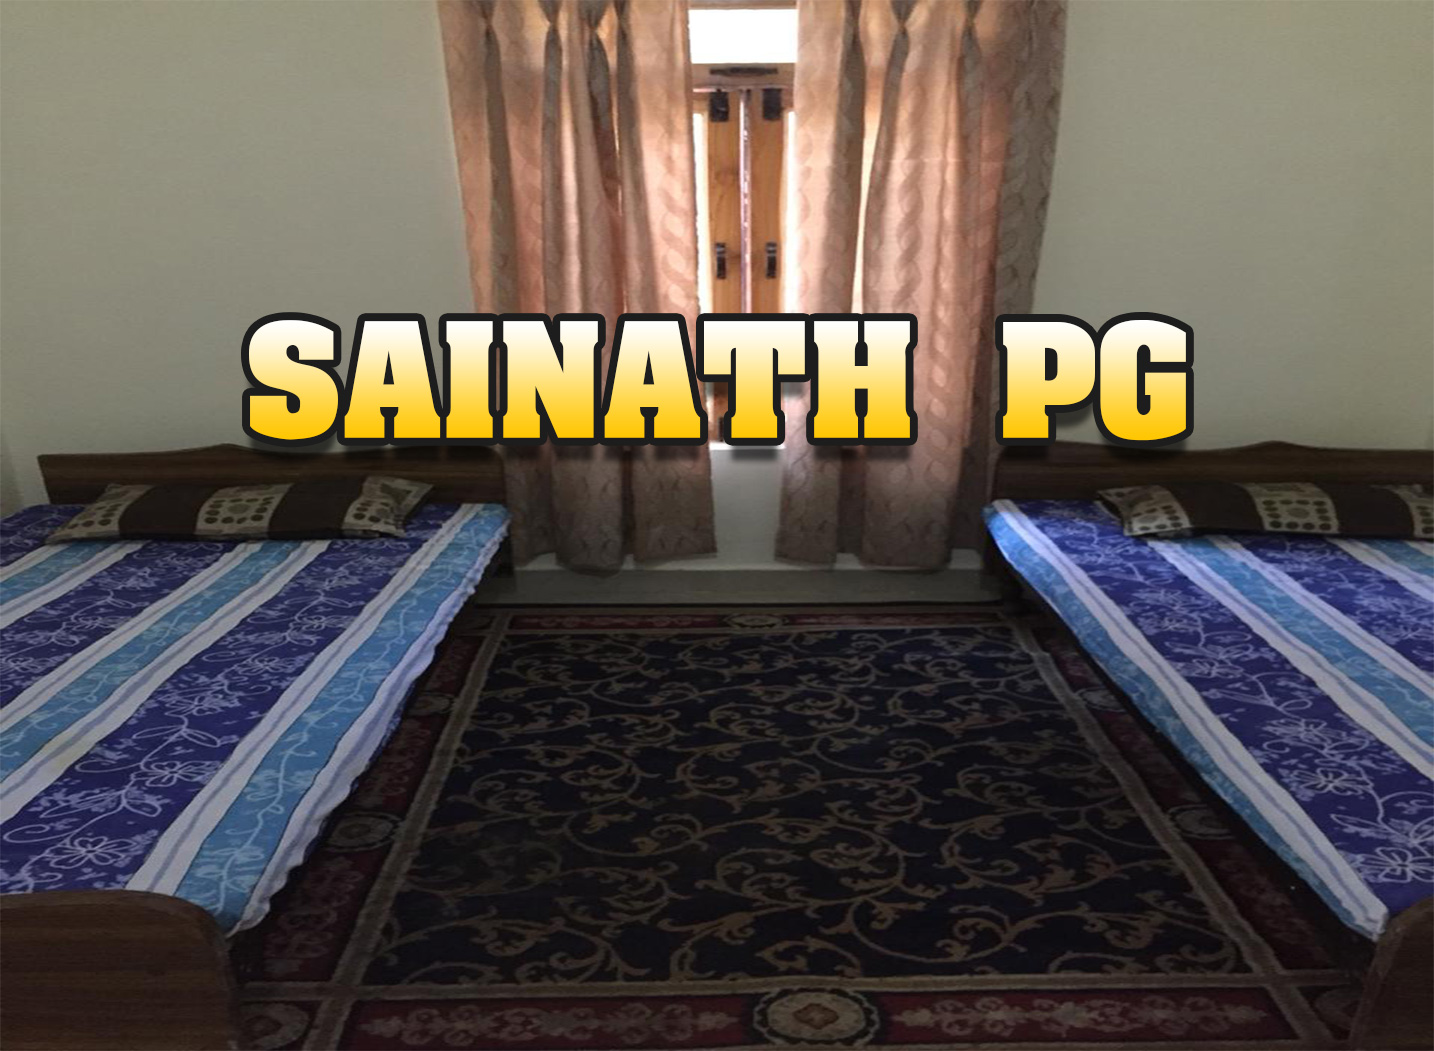 Sainath PG